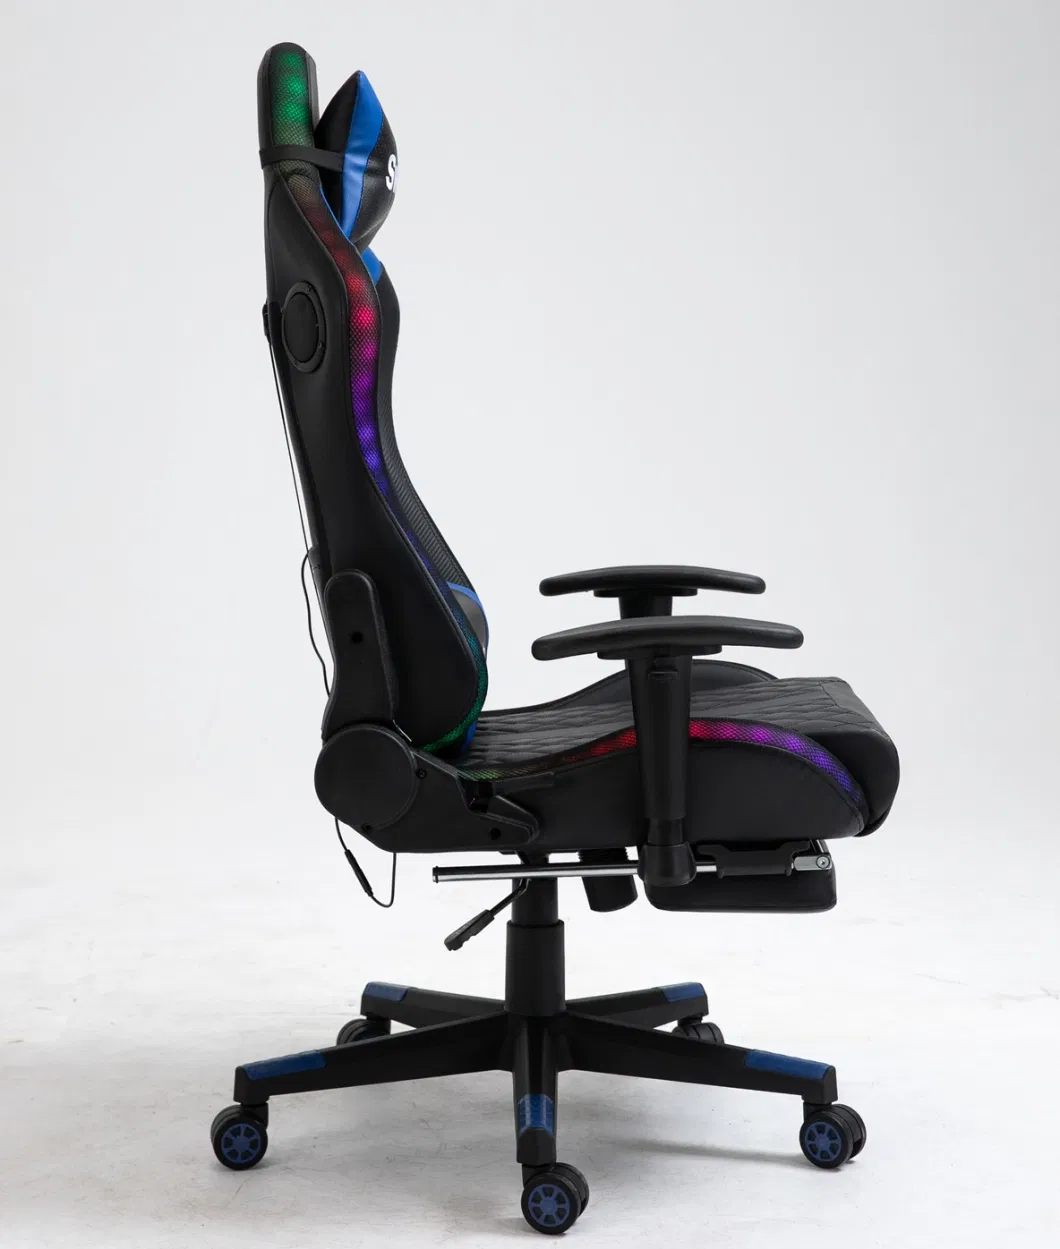 Blueteeth Music Player Speaker Gaming Chair